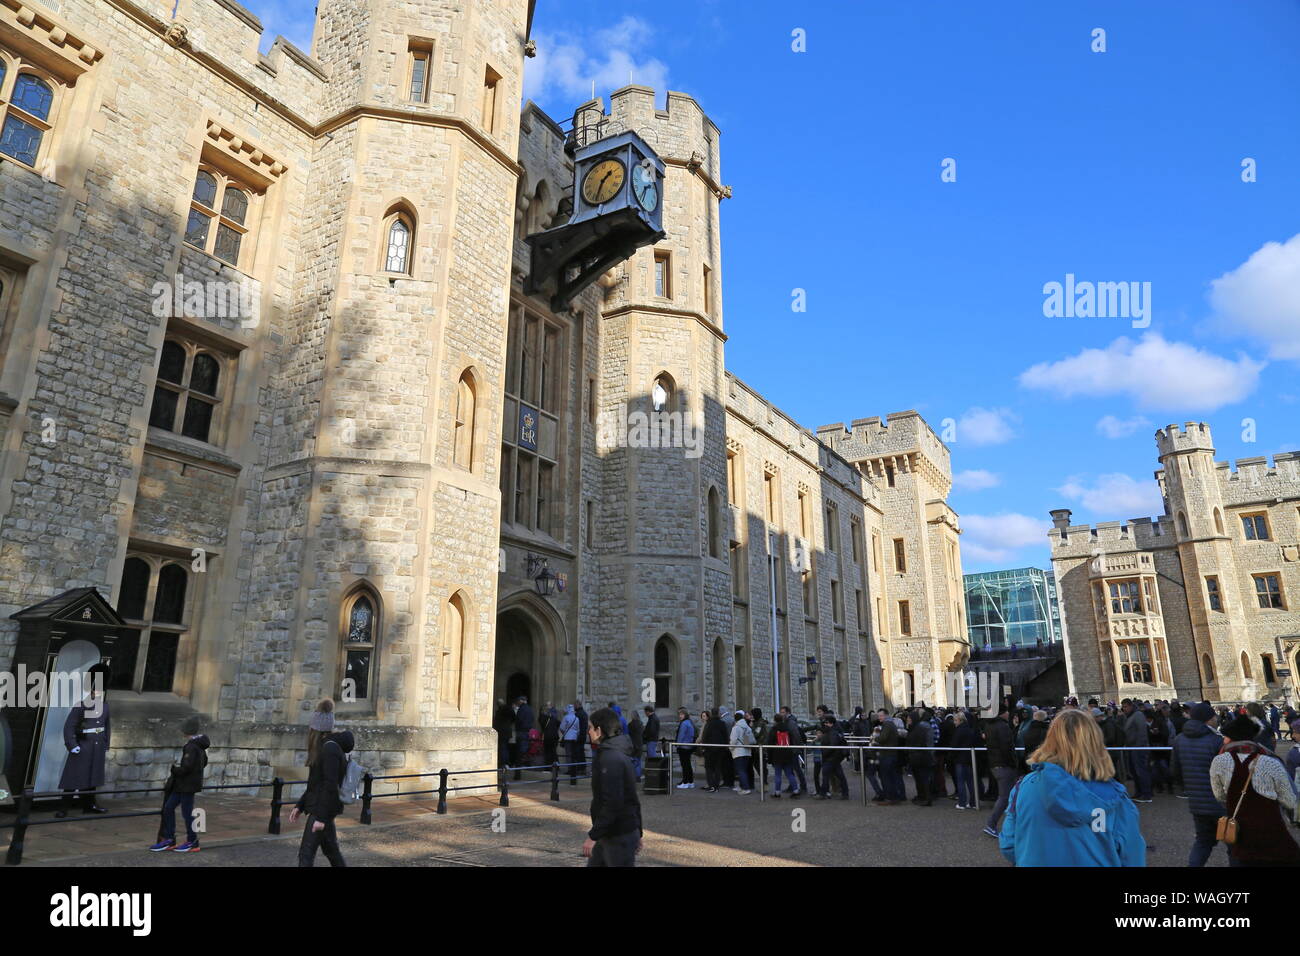 Queuing Kronjuwelen, Waterloo, inneren Bezirk, Tower of London, London, England, Großbritannien, USA, UK, Europa zu sehen Stockfoto